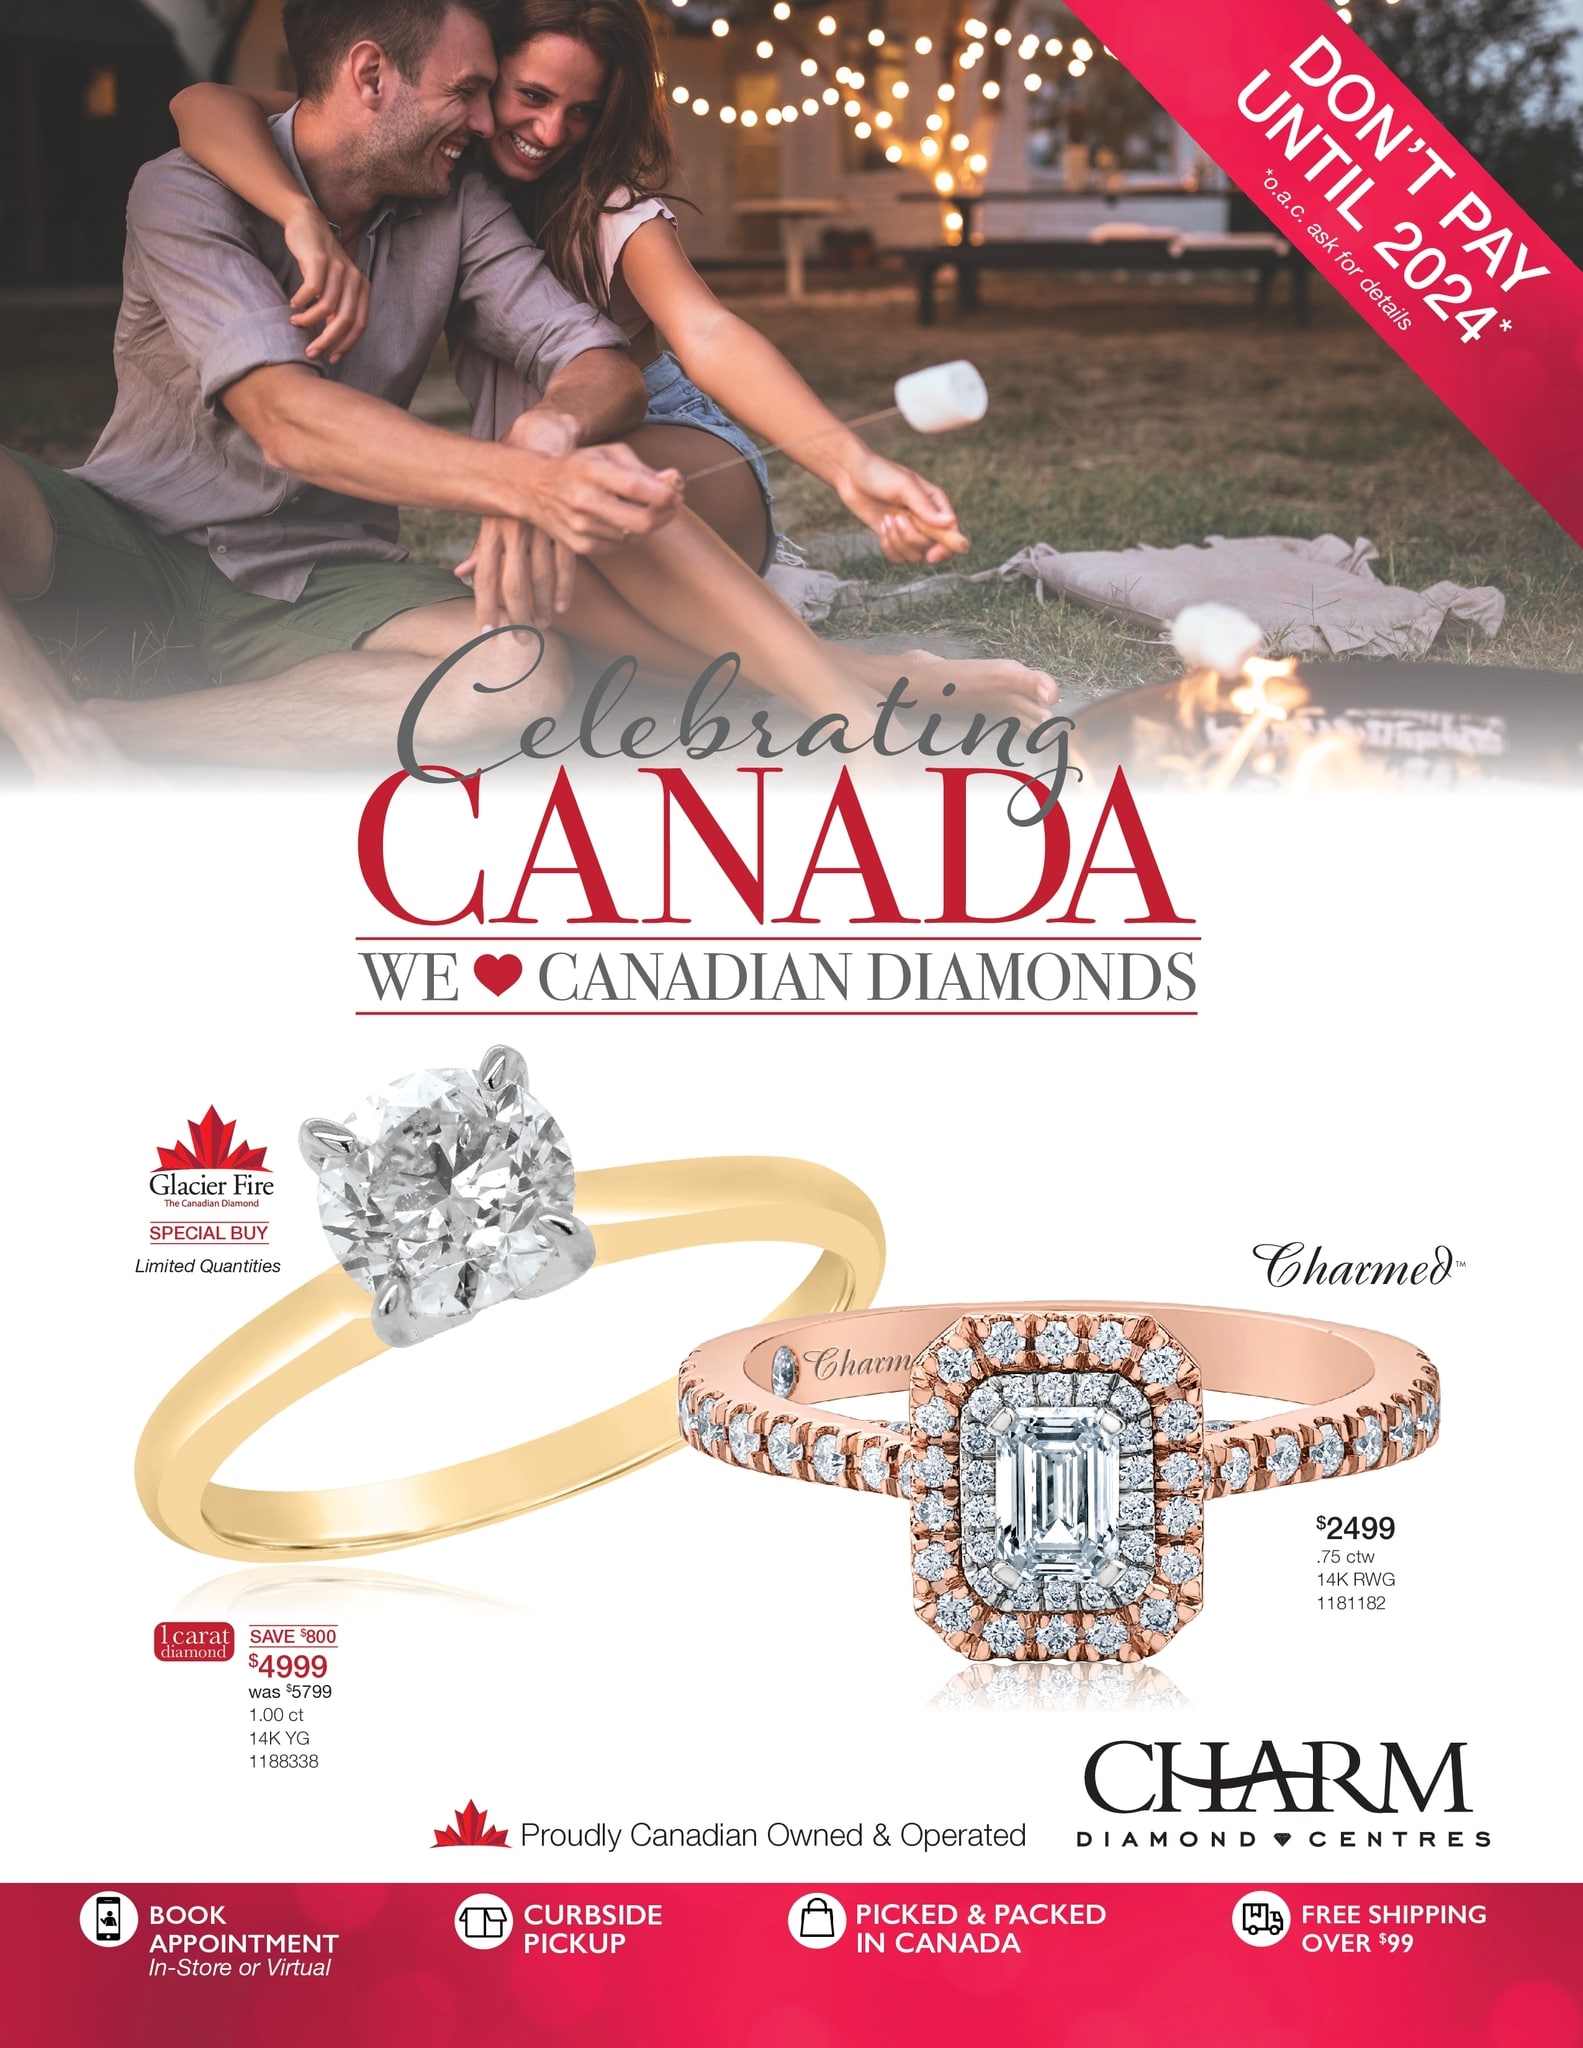 Charm Diamonds Centres - Monthly Savings